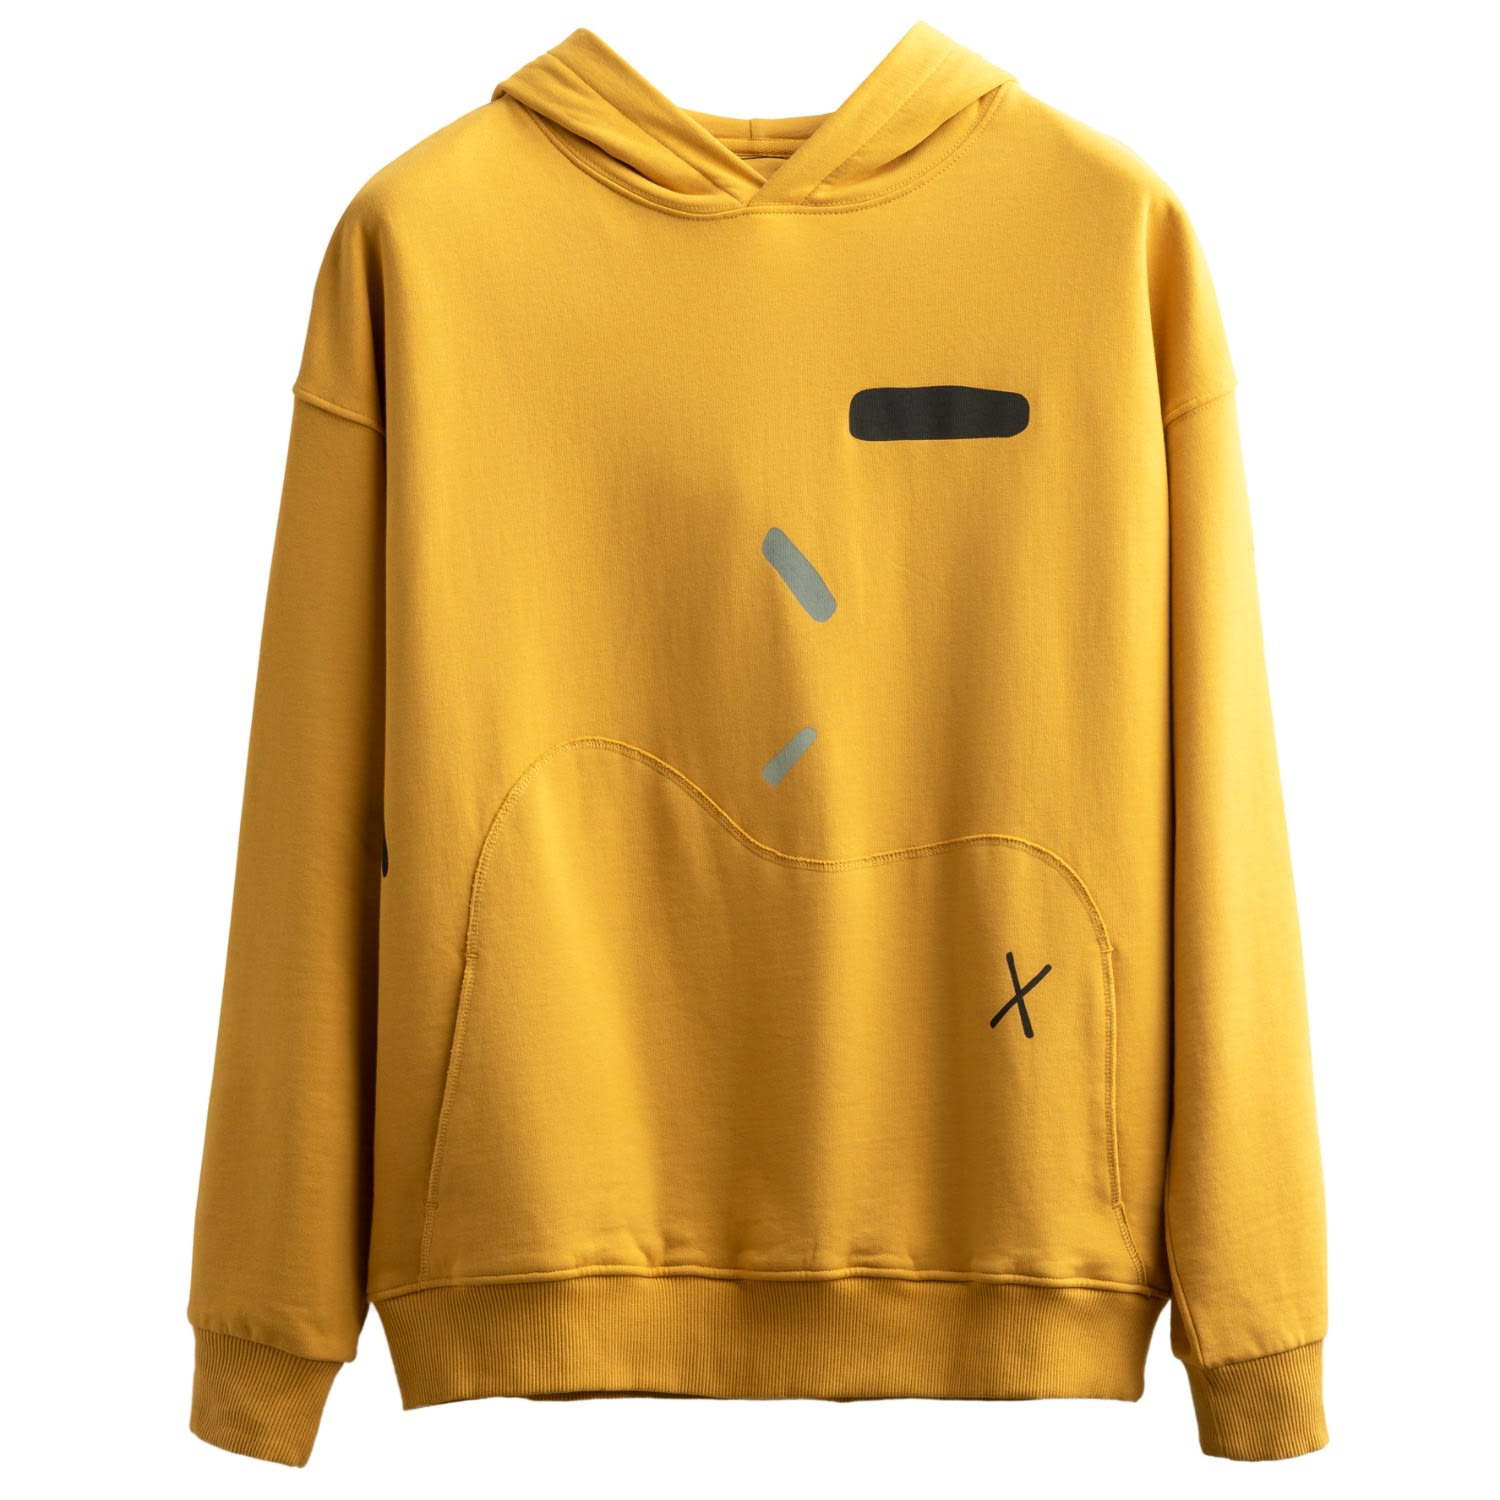 Men's Yellow / Orange Unisex Design Hoodie Sweatshirt - Apenda - Sulphur Extra Small KAFT